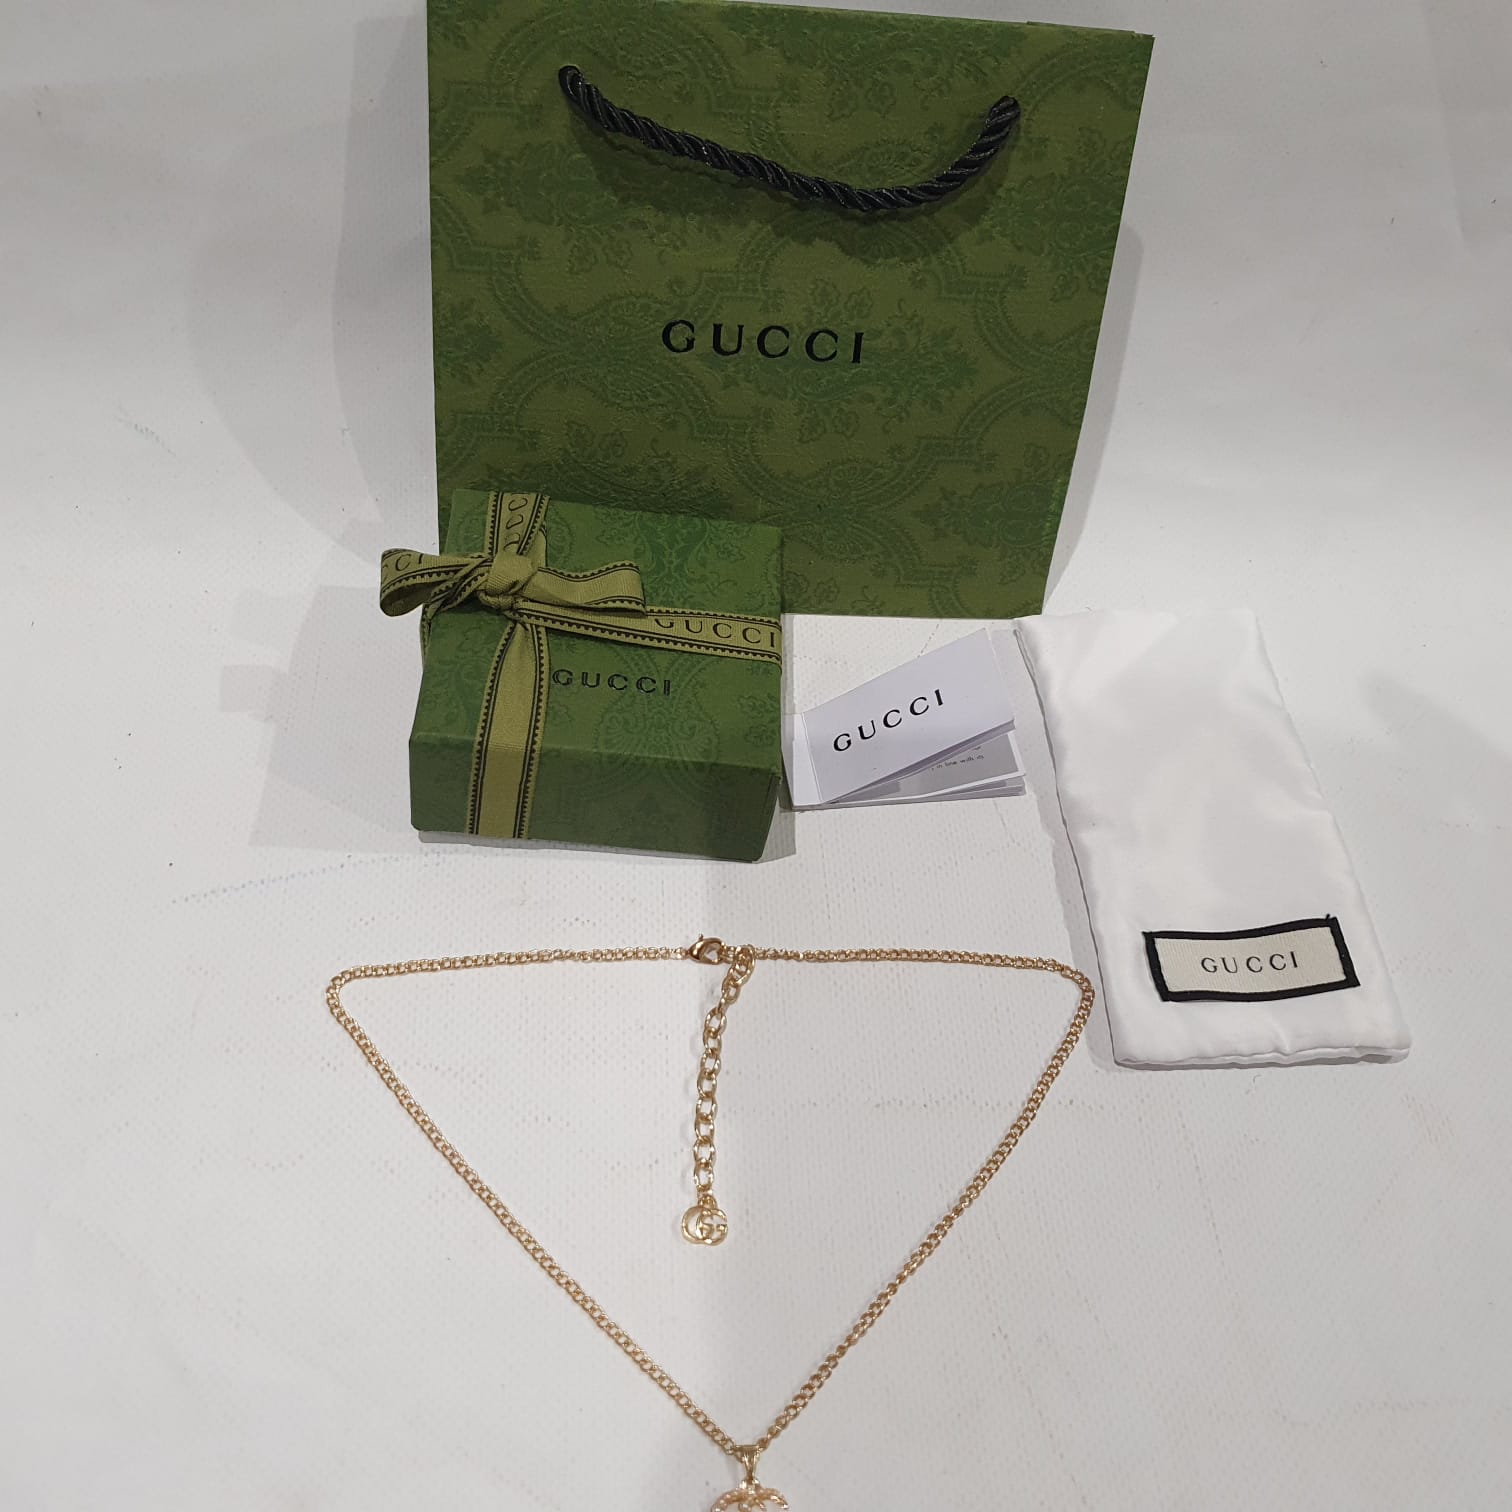 Gucci Necklace